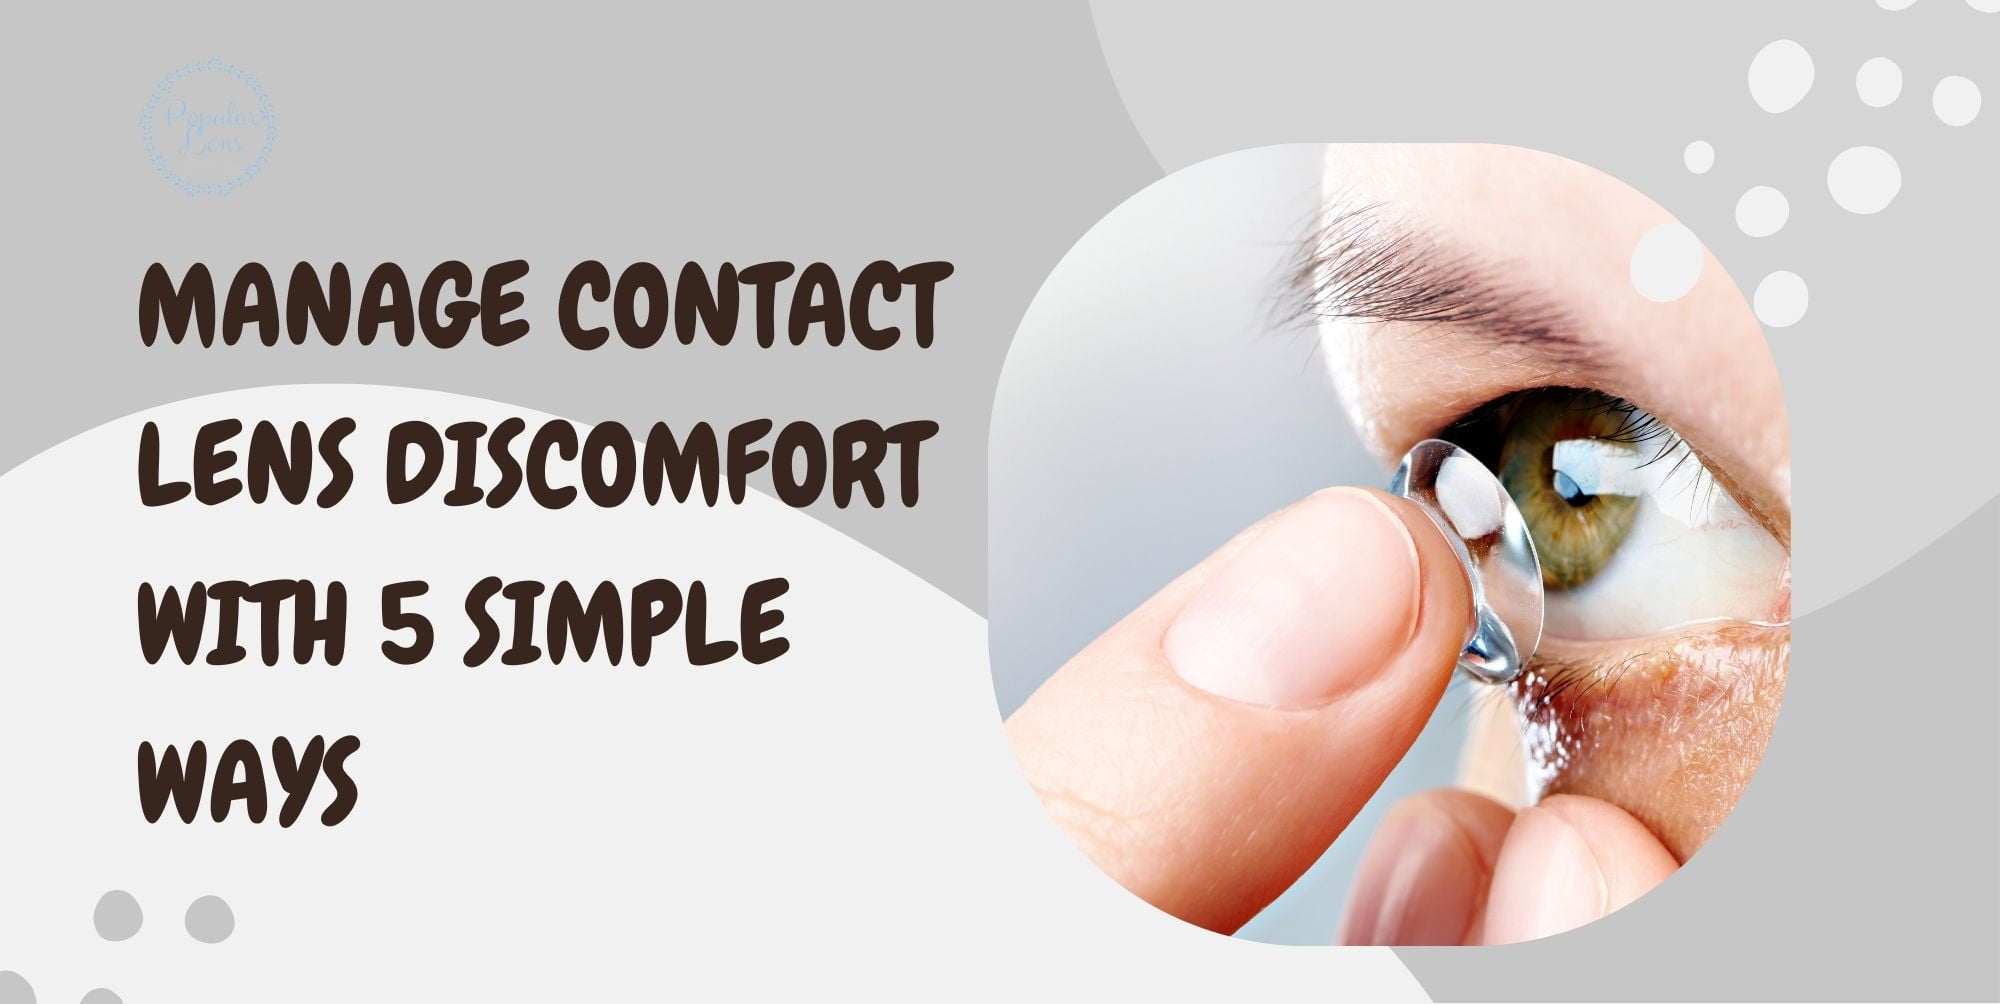 Contact Lens Discomfort